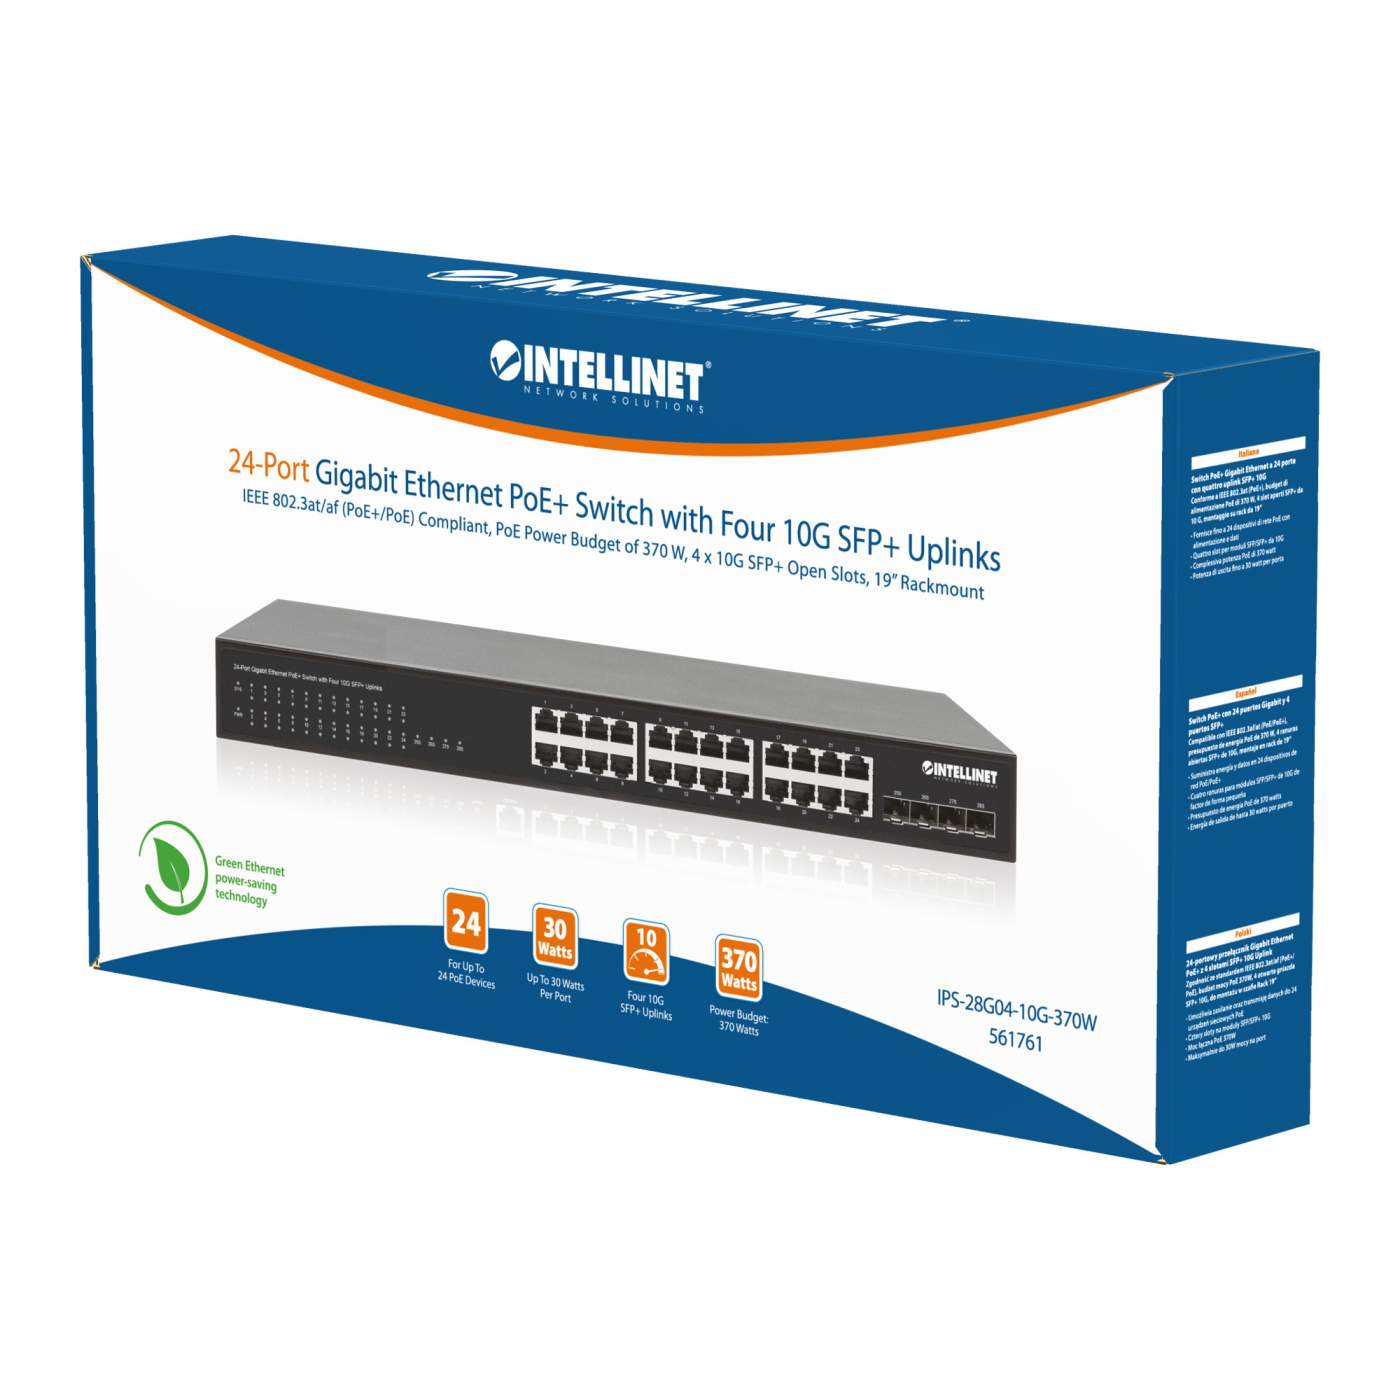 24-Port Gigabit Ethernet PoE+ Switch with Four 10G SFP+ Uplinks Packaging Image 2